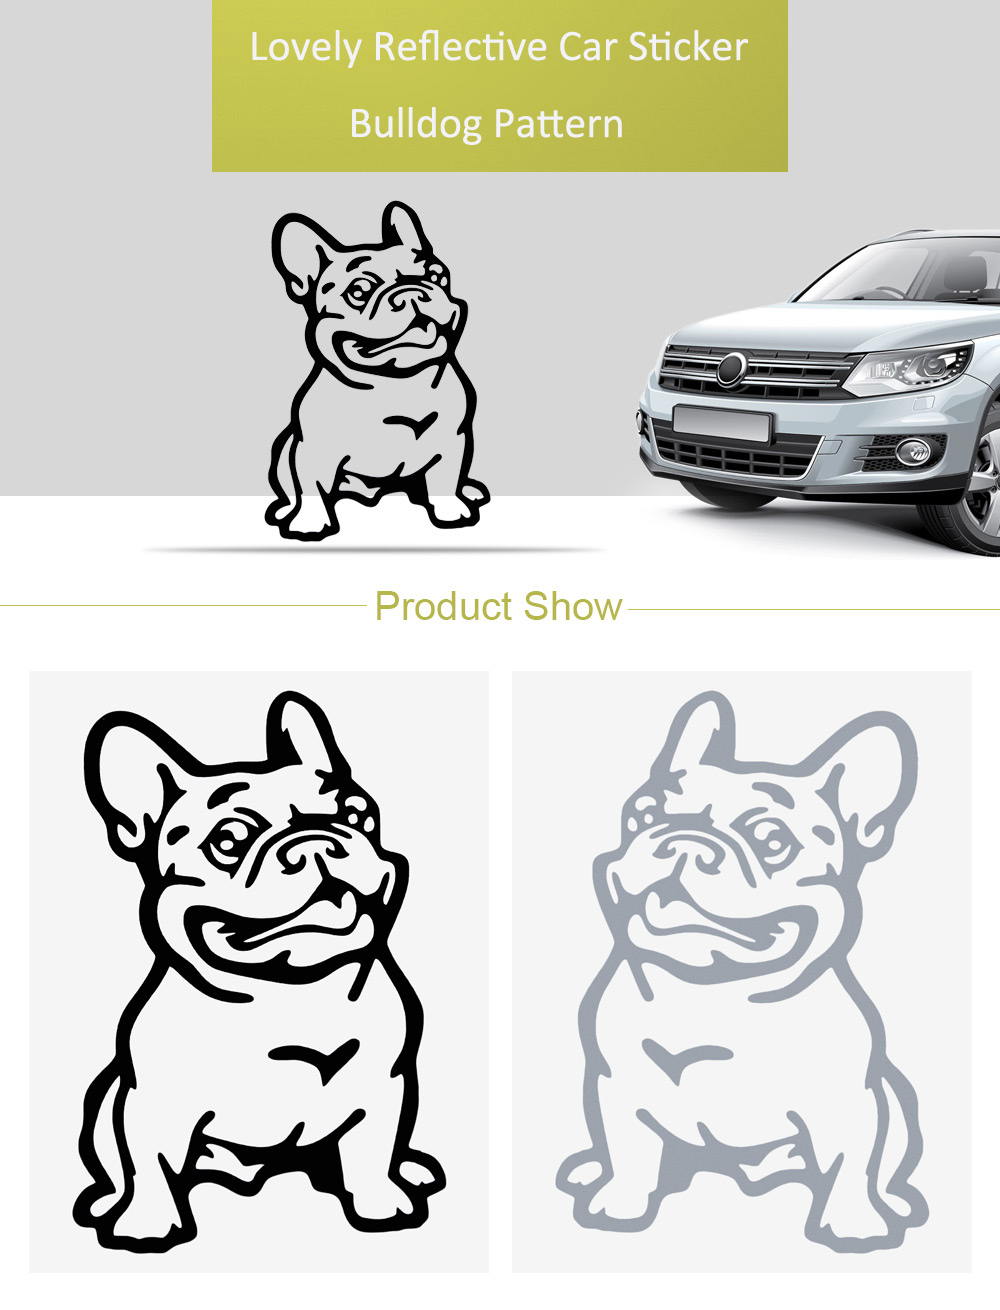 Lovely Reflective Car Sticker Bulldog Pattern